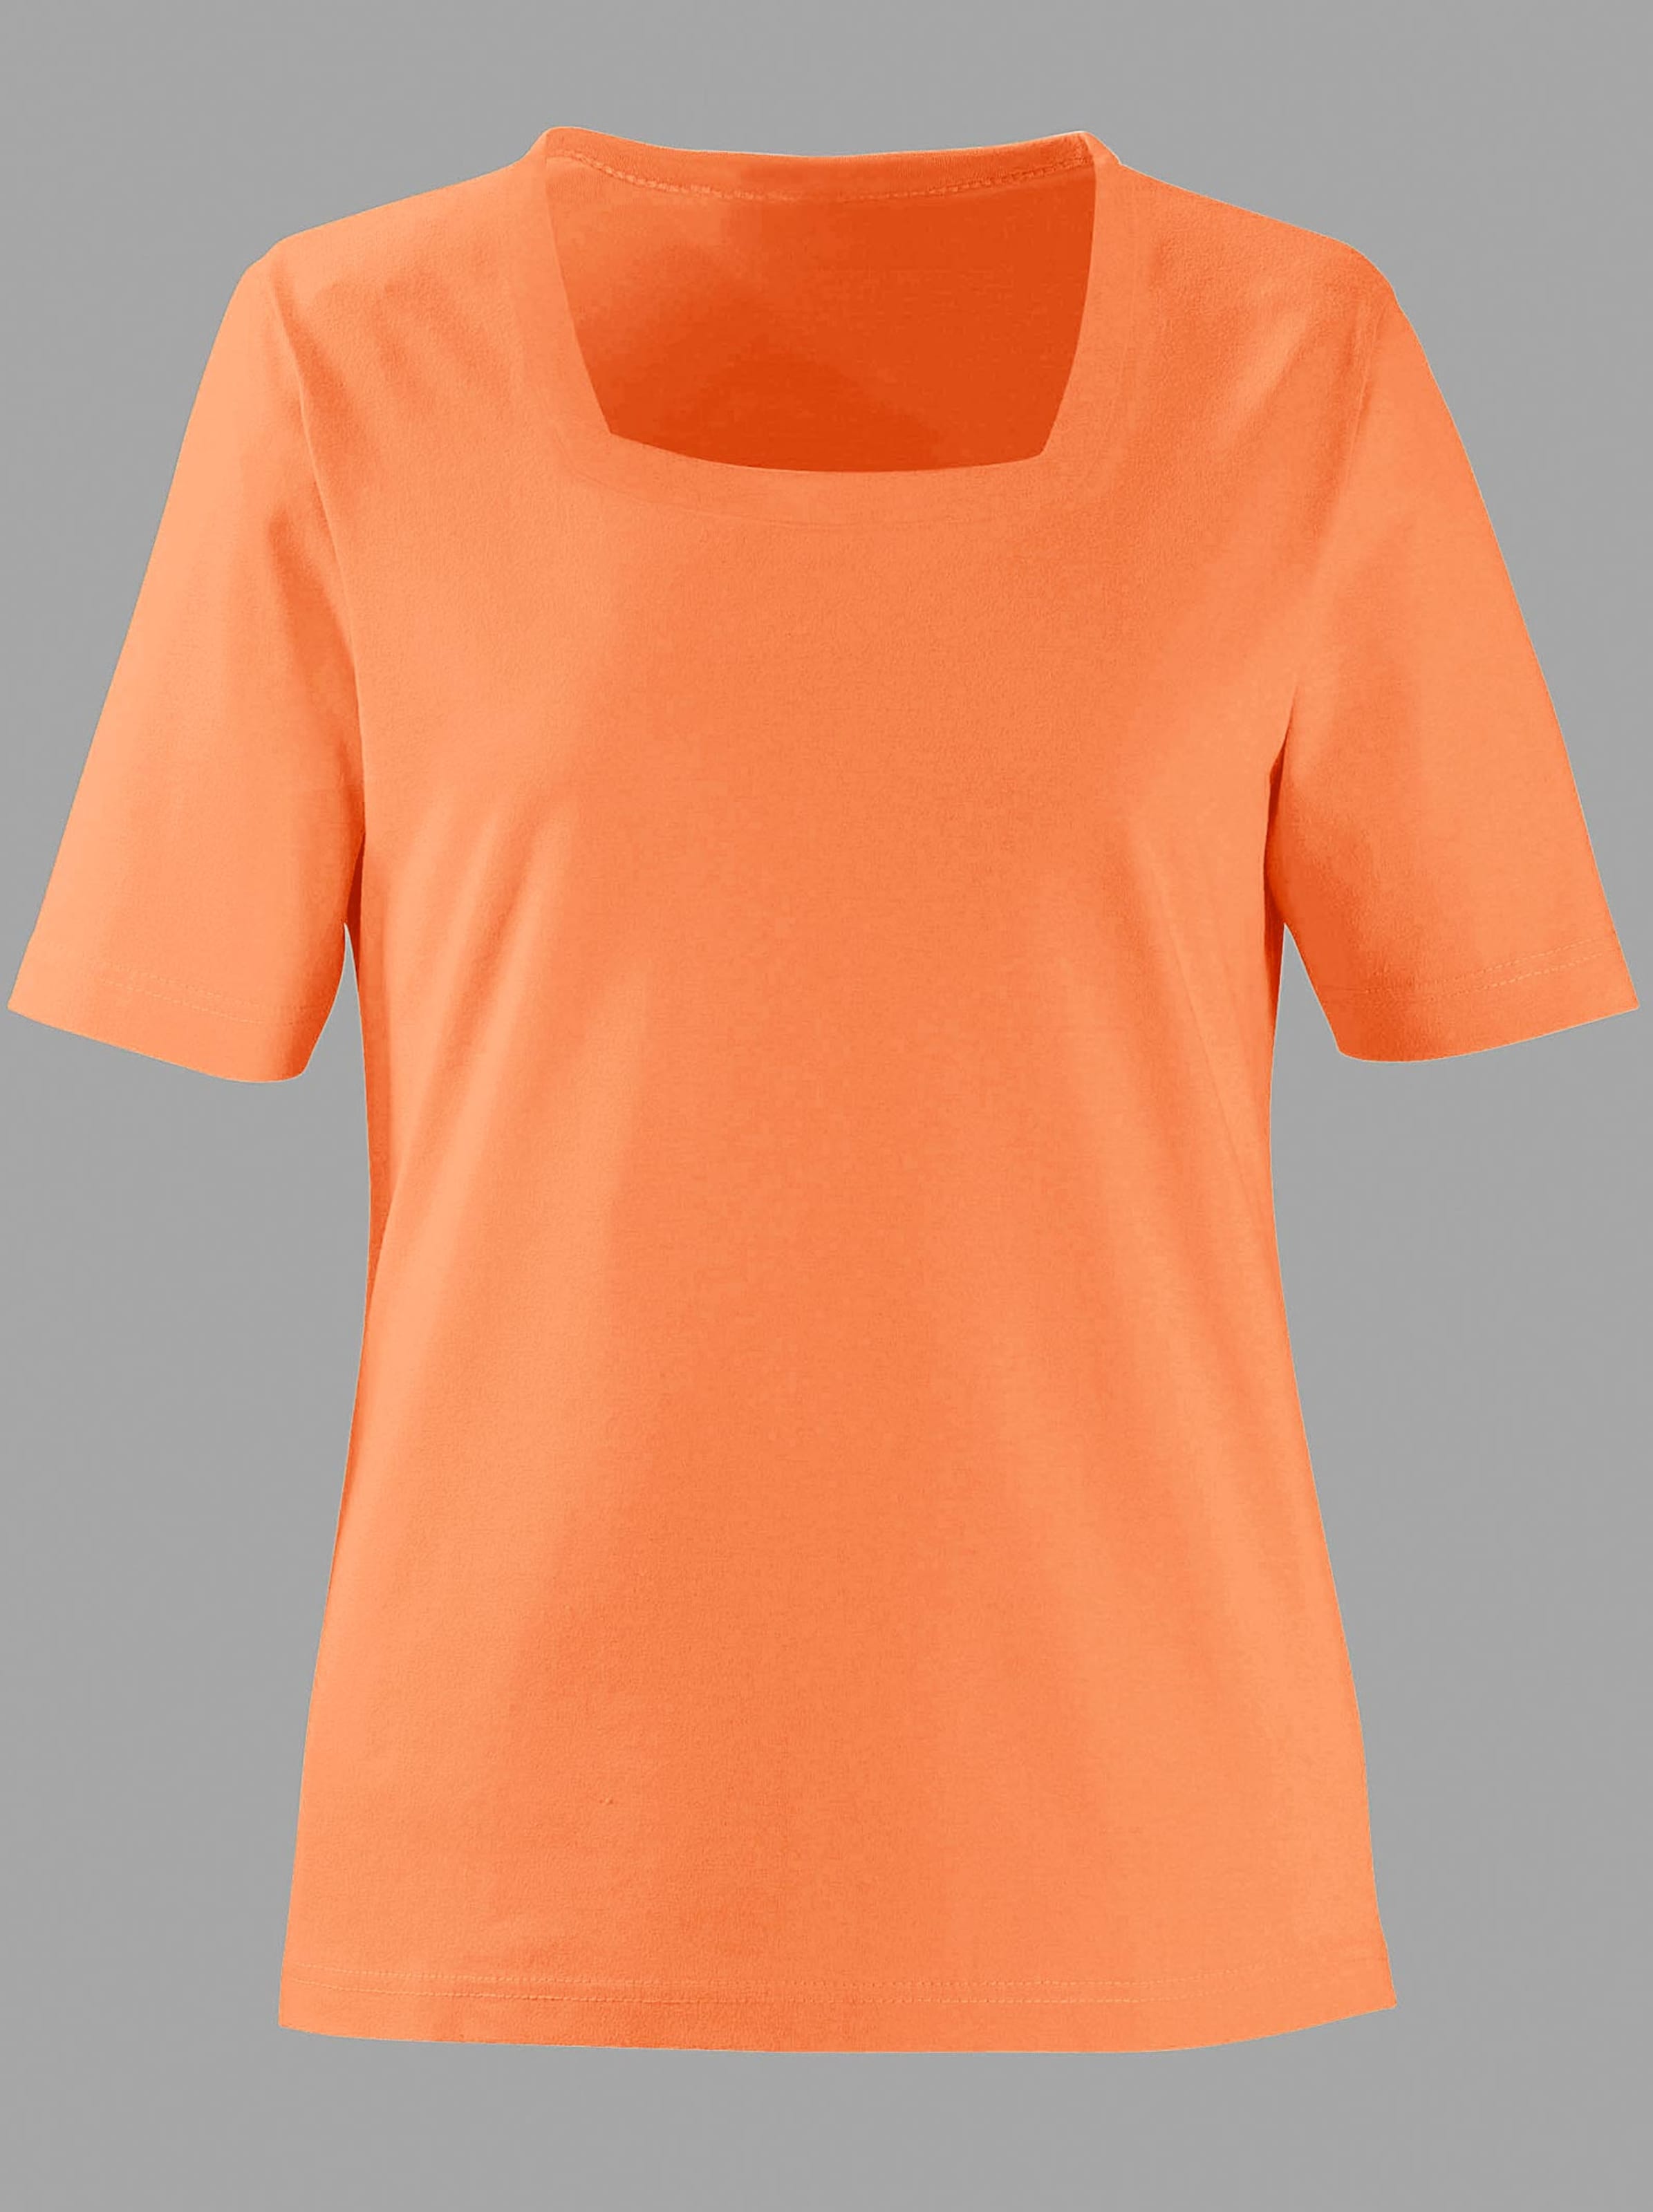 Damenmode Shirts Kurzarmshirt in orange 